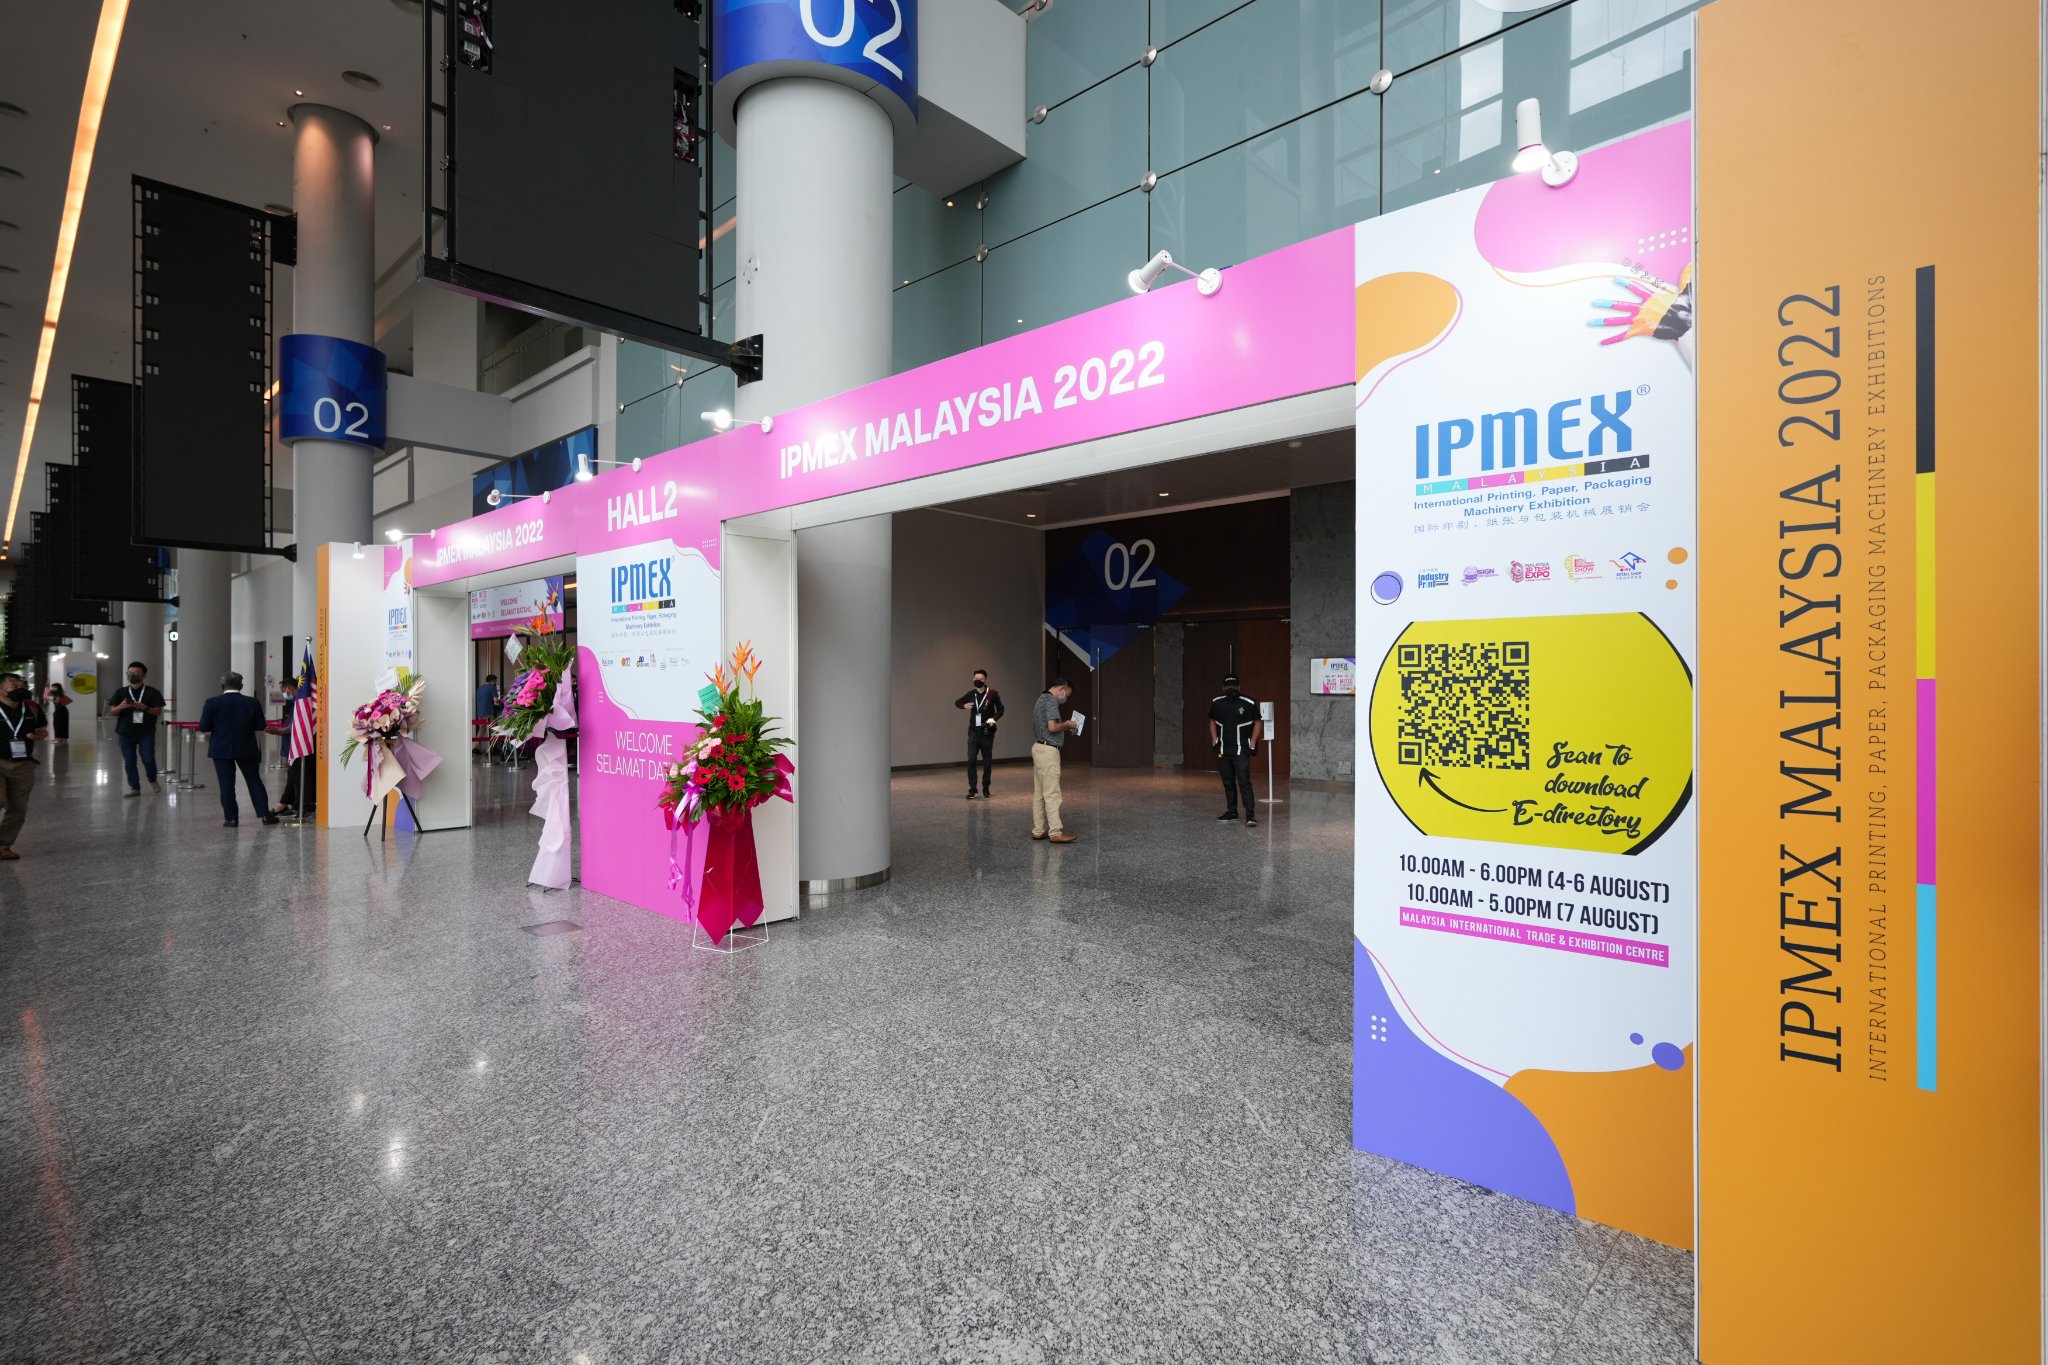 IMAX at IPMEX MALAYSIA 2022